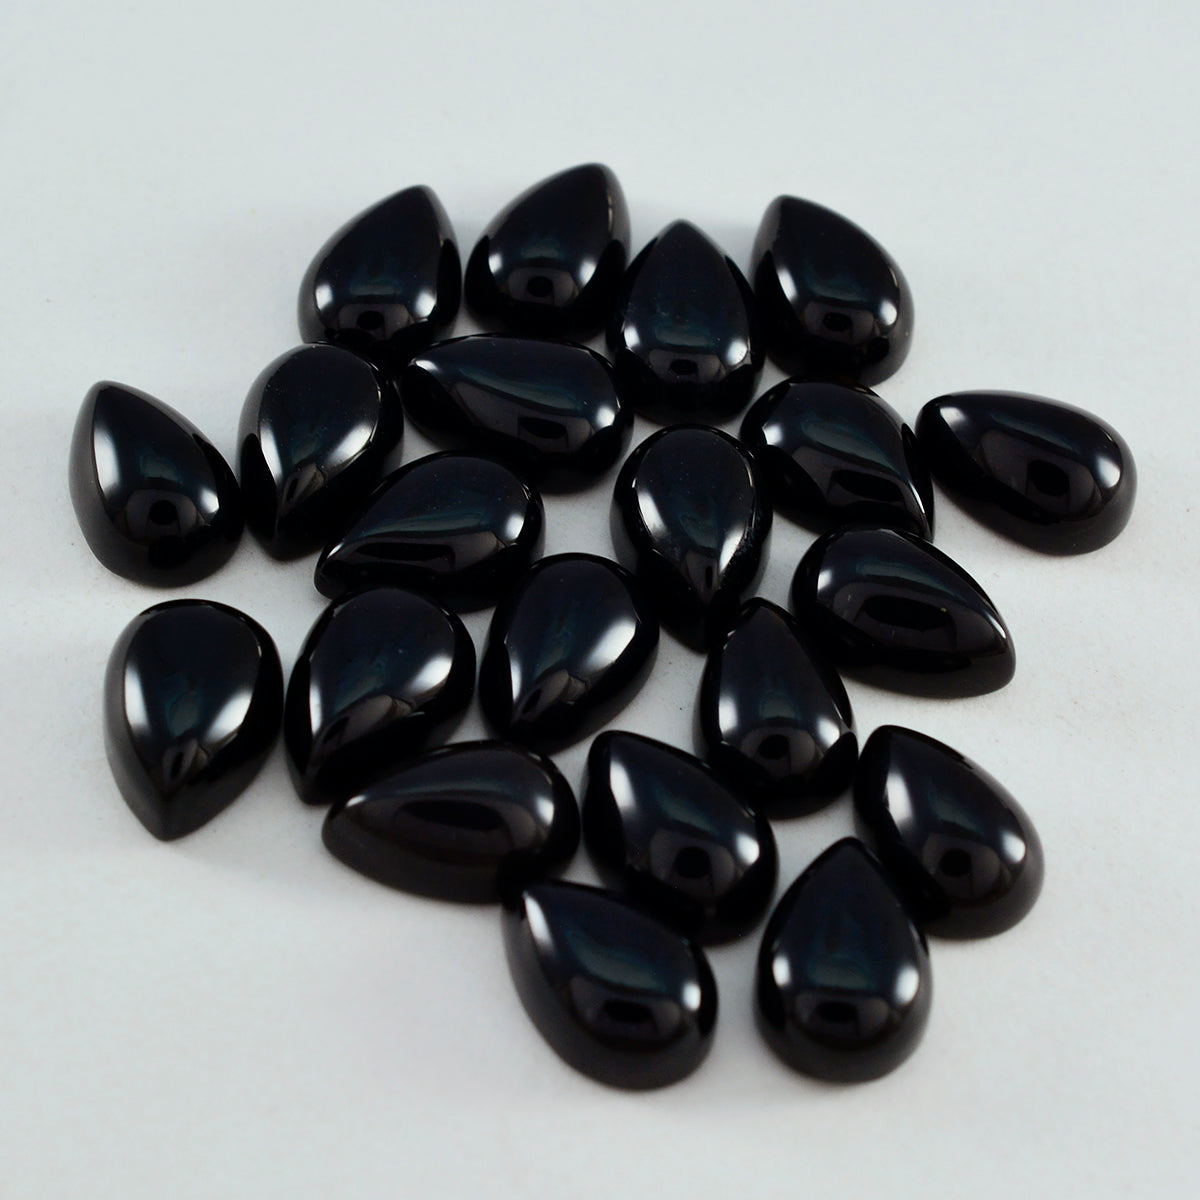 Riyogems 1PC Black Onyx Cabochon 5x7 mm Pear Shape awesome Quality Loose Stone